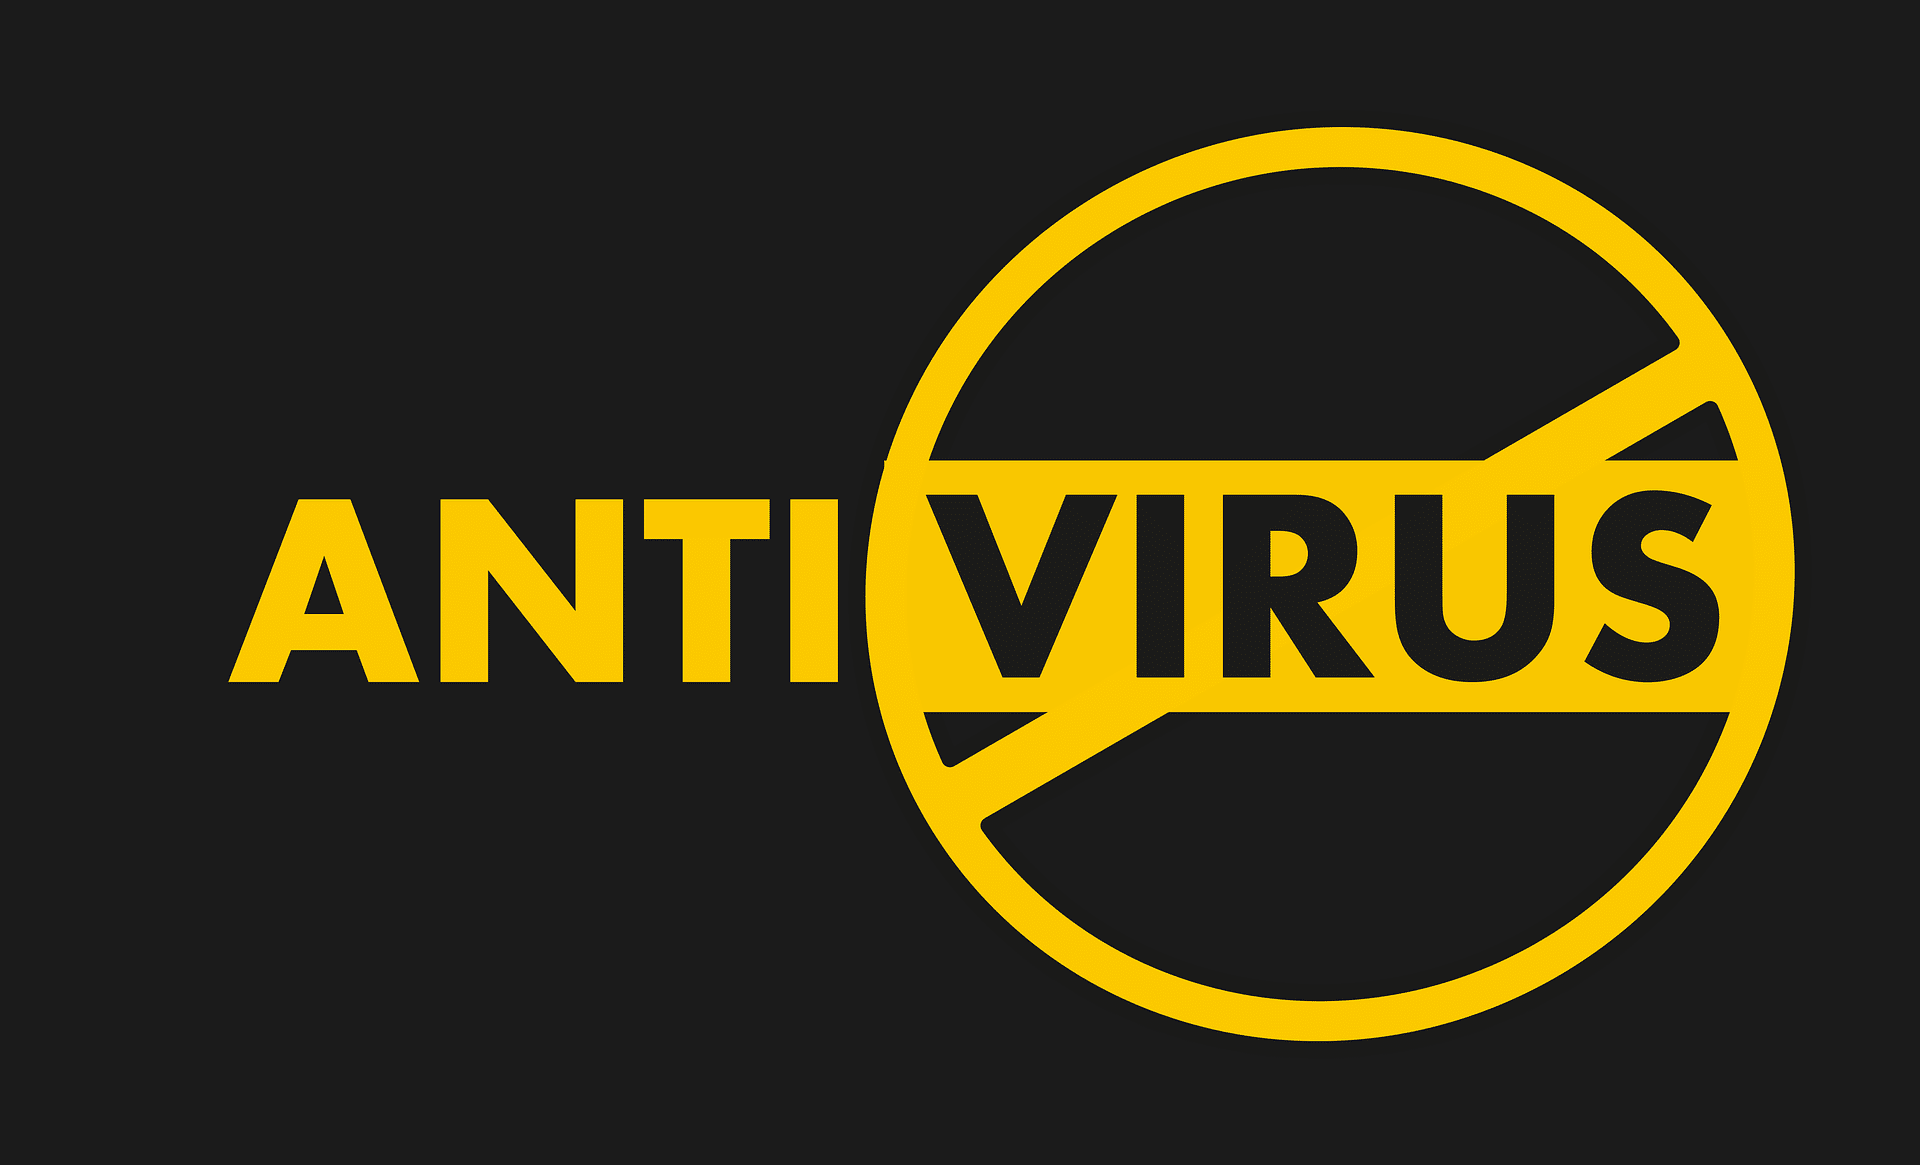 avg antivirus vs avast